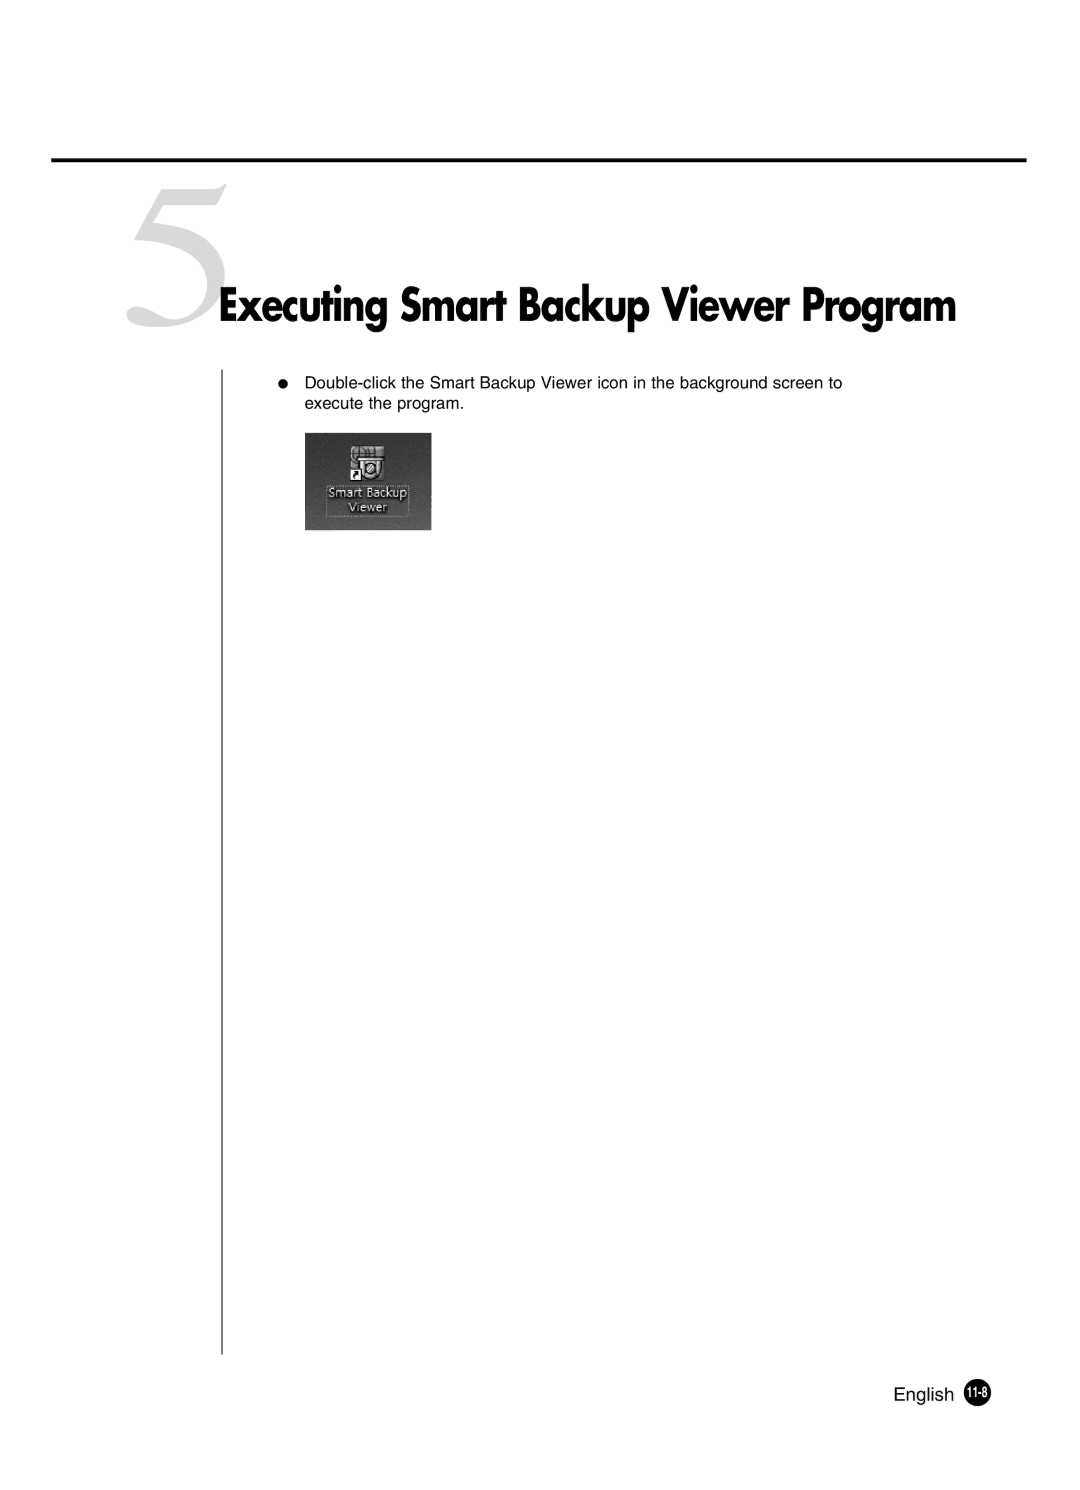 Samsung SHR-4160P manual 5Executing Smart Backup Viewer Program 